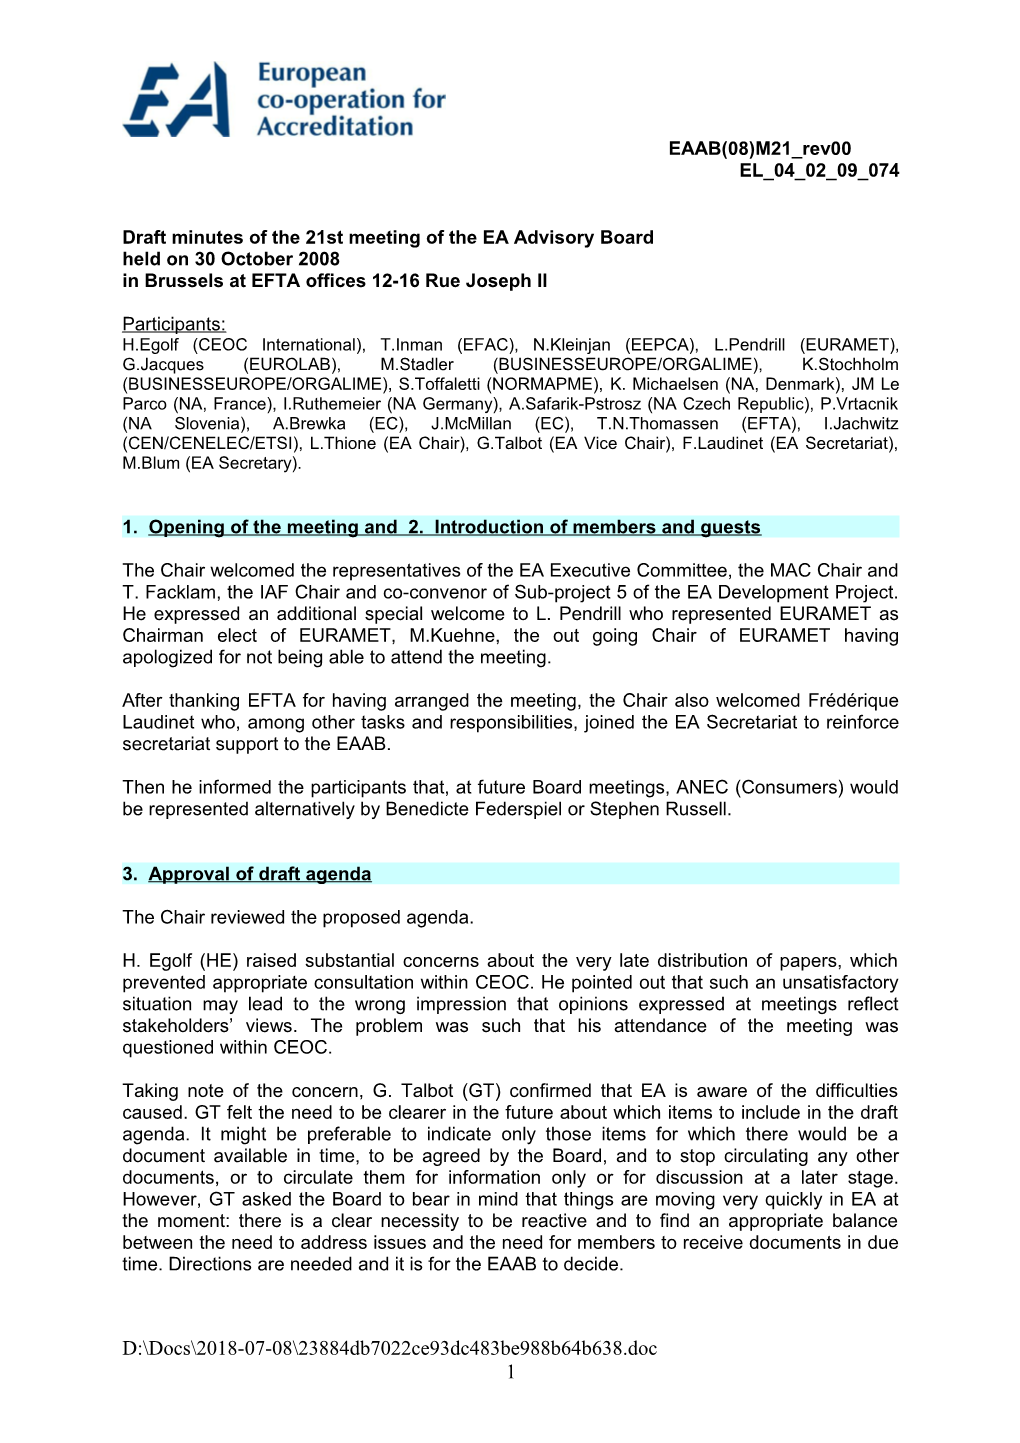 Draft Agenda of the 21St Meeting of the EA Advisory Board